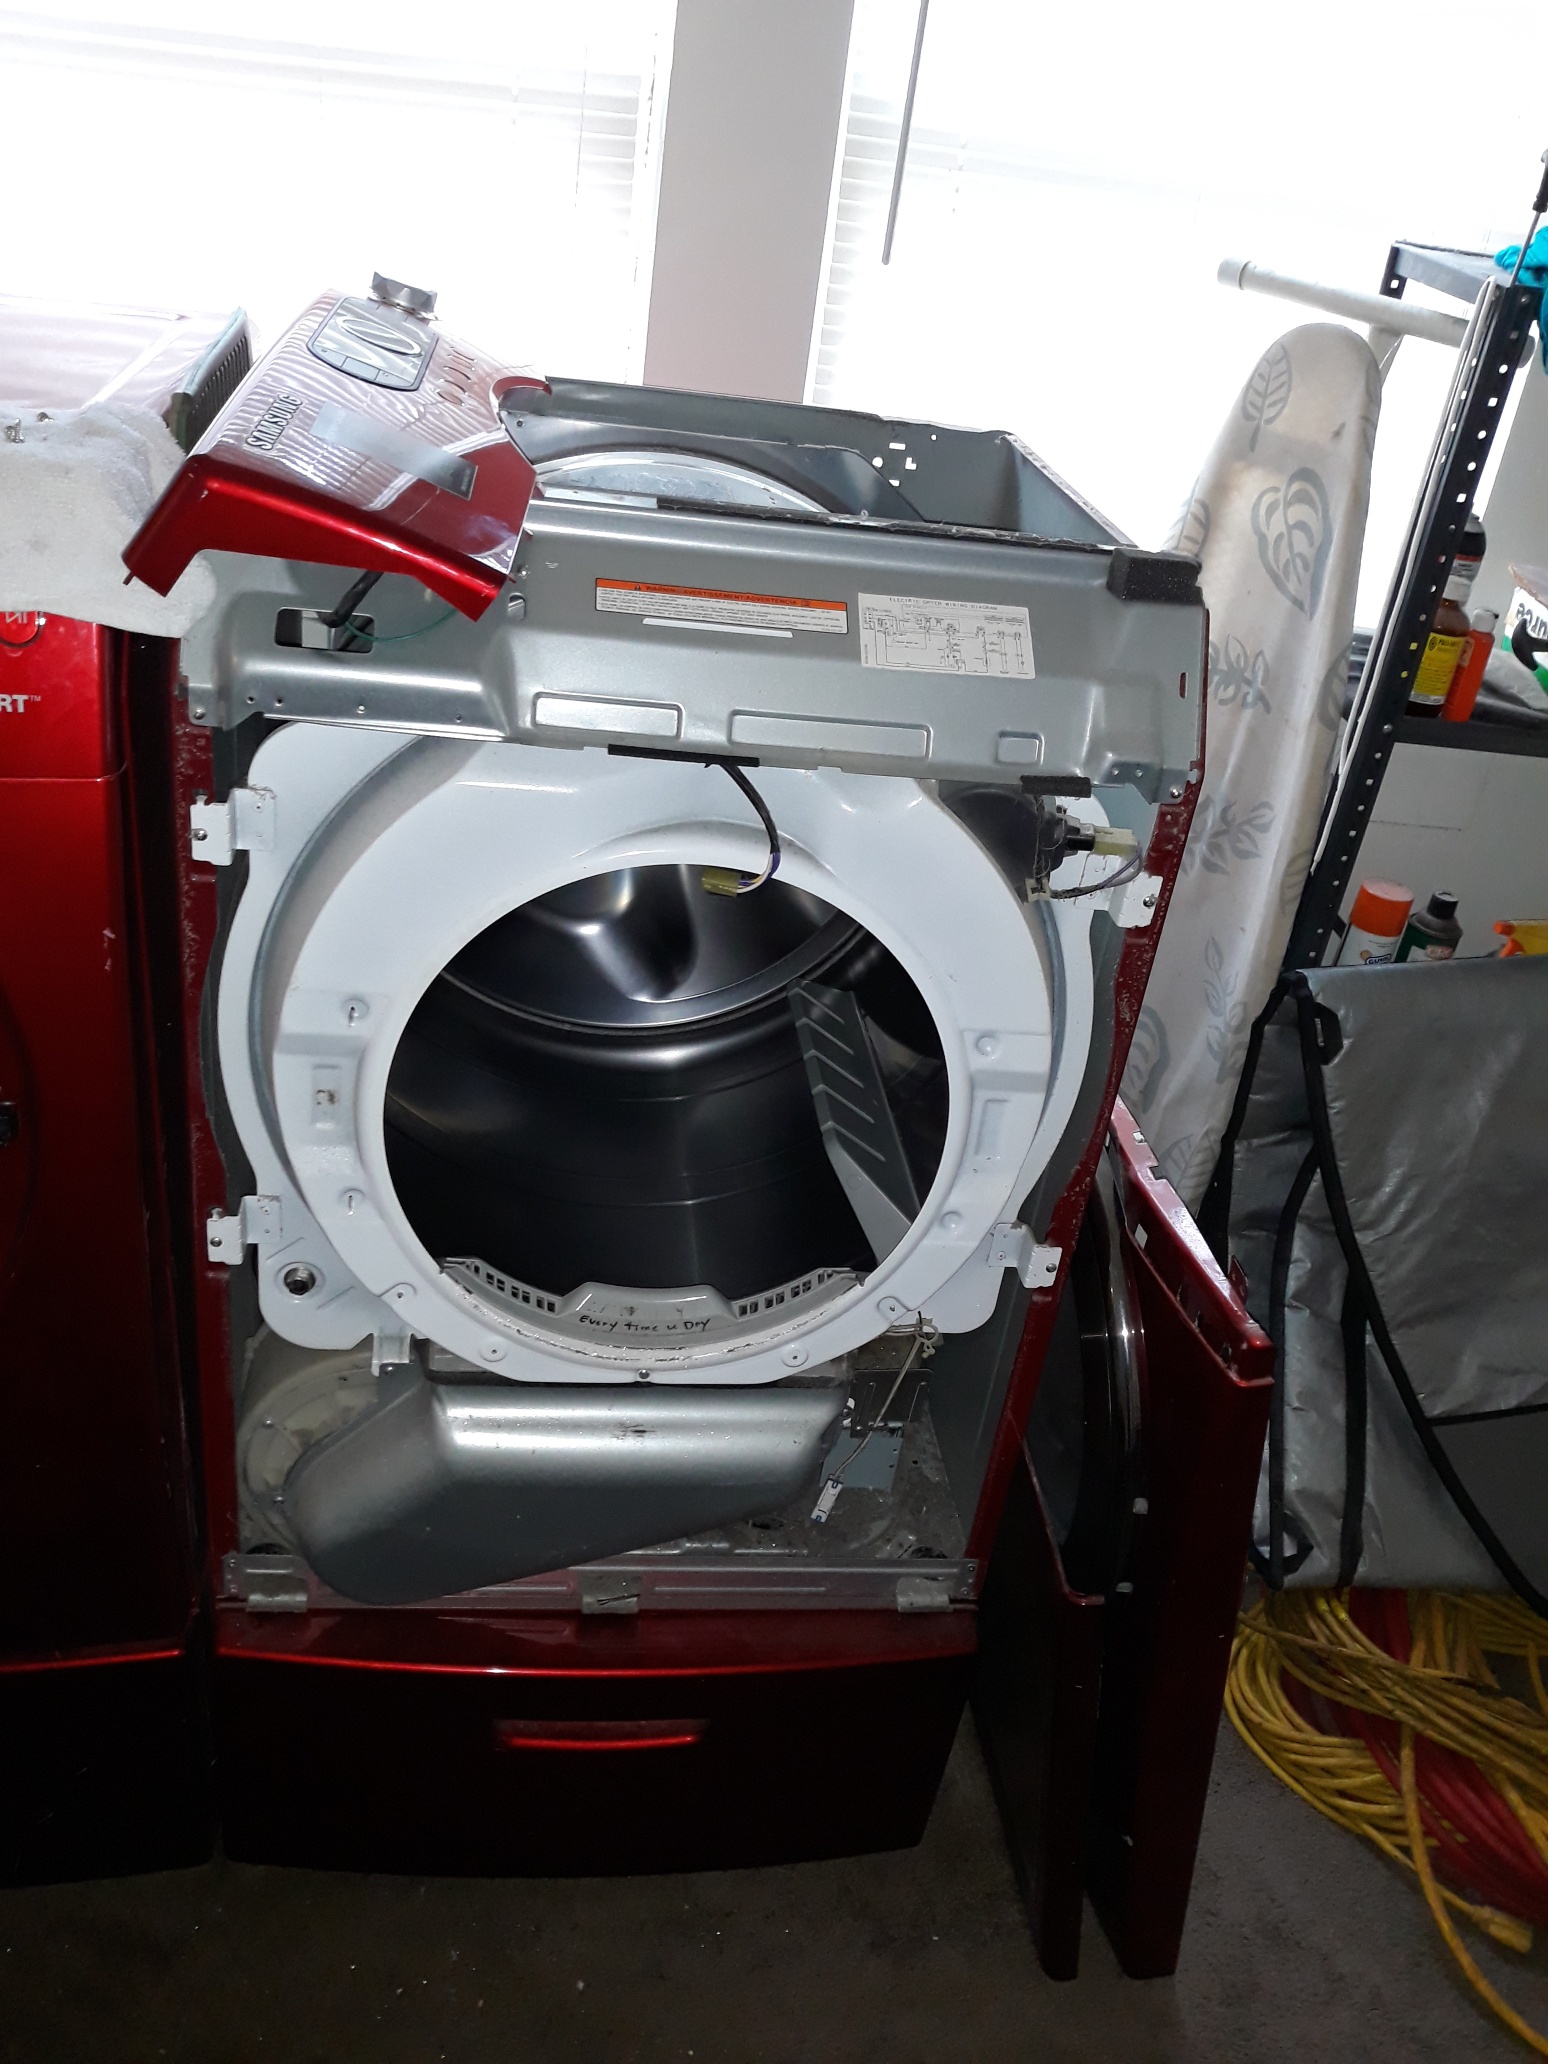 appliance repair dryer repair samsung dryer not heating oxford oaks ln oxford fl 34484